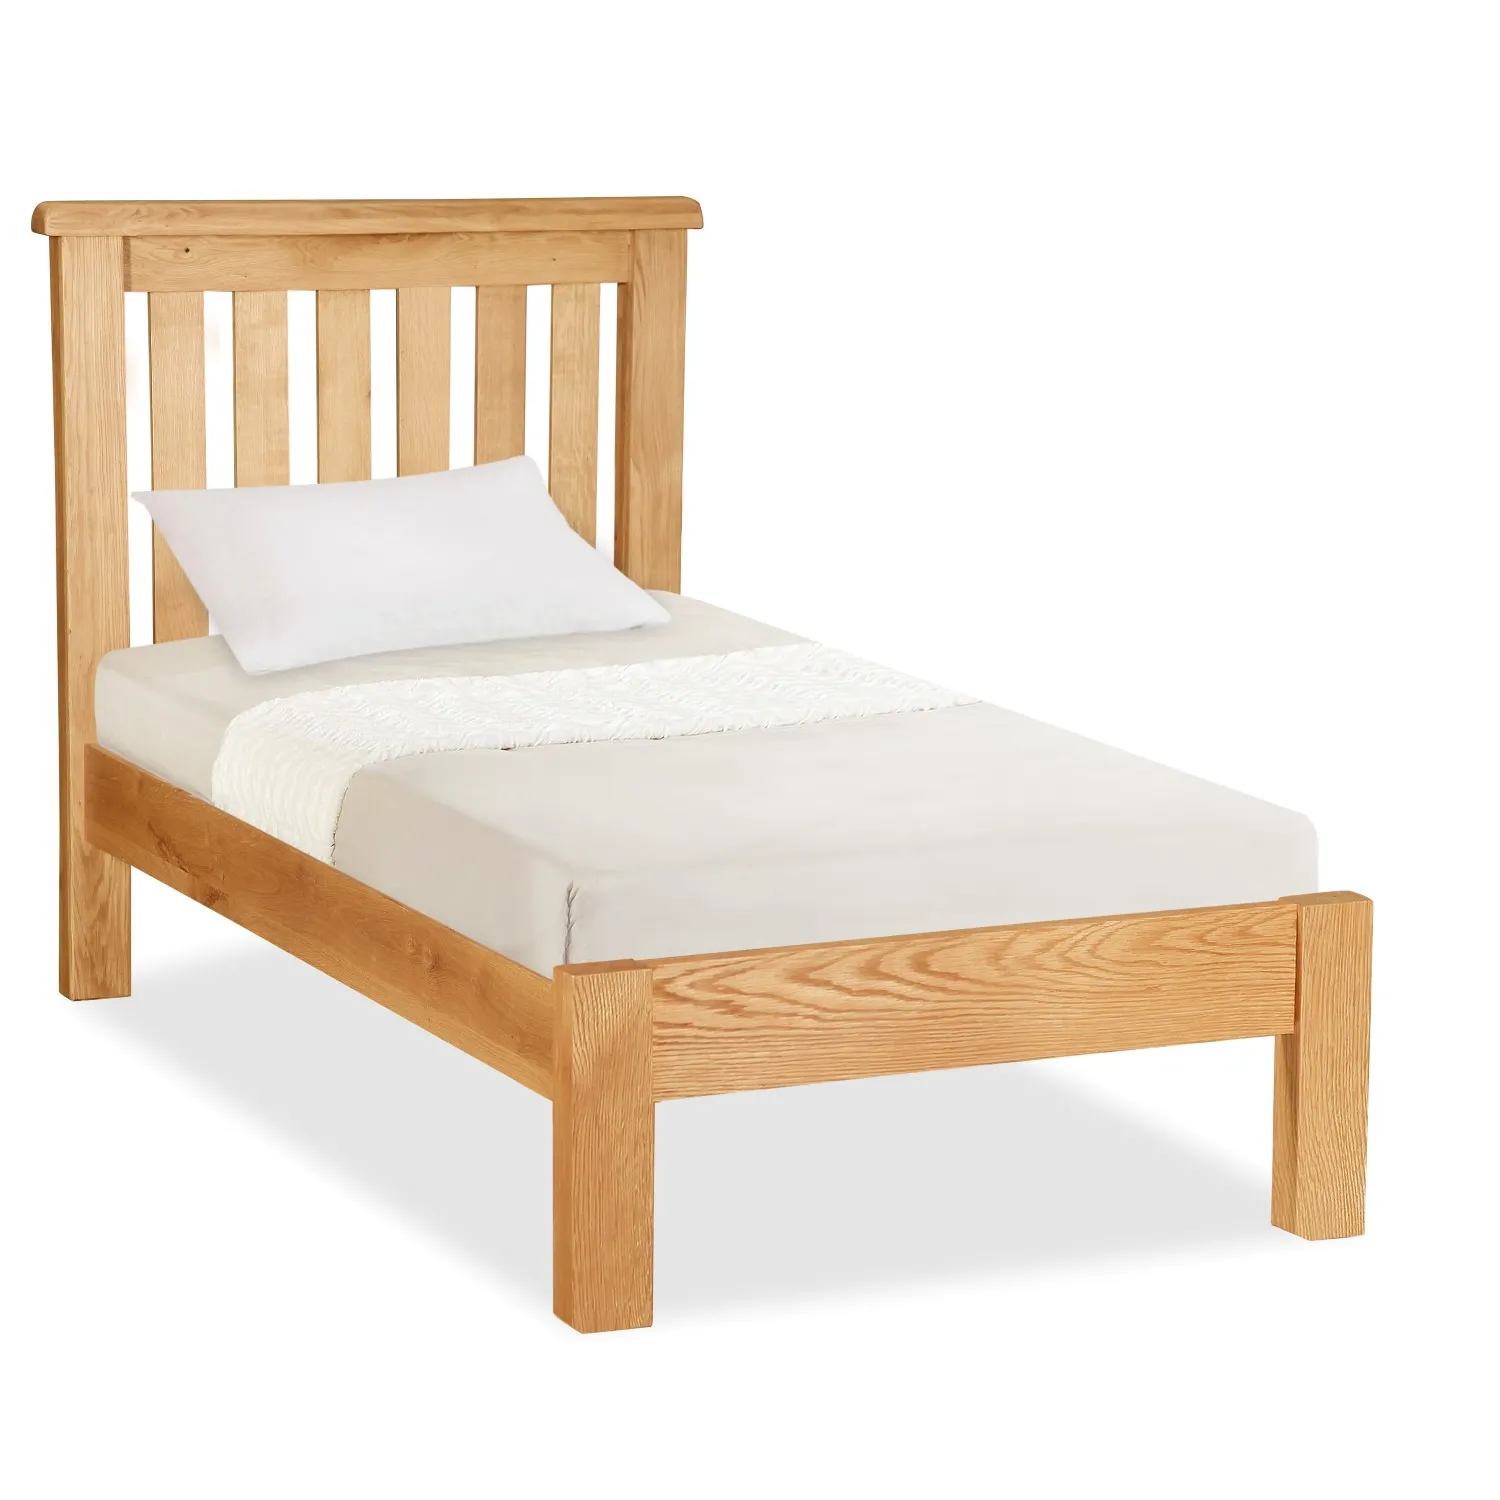 Rustic Solid Oak 3ft Low Bed